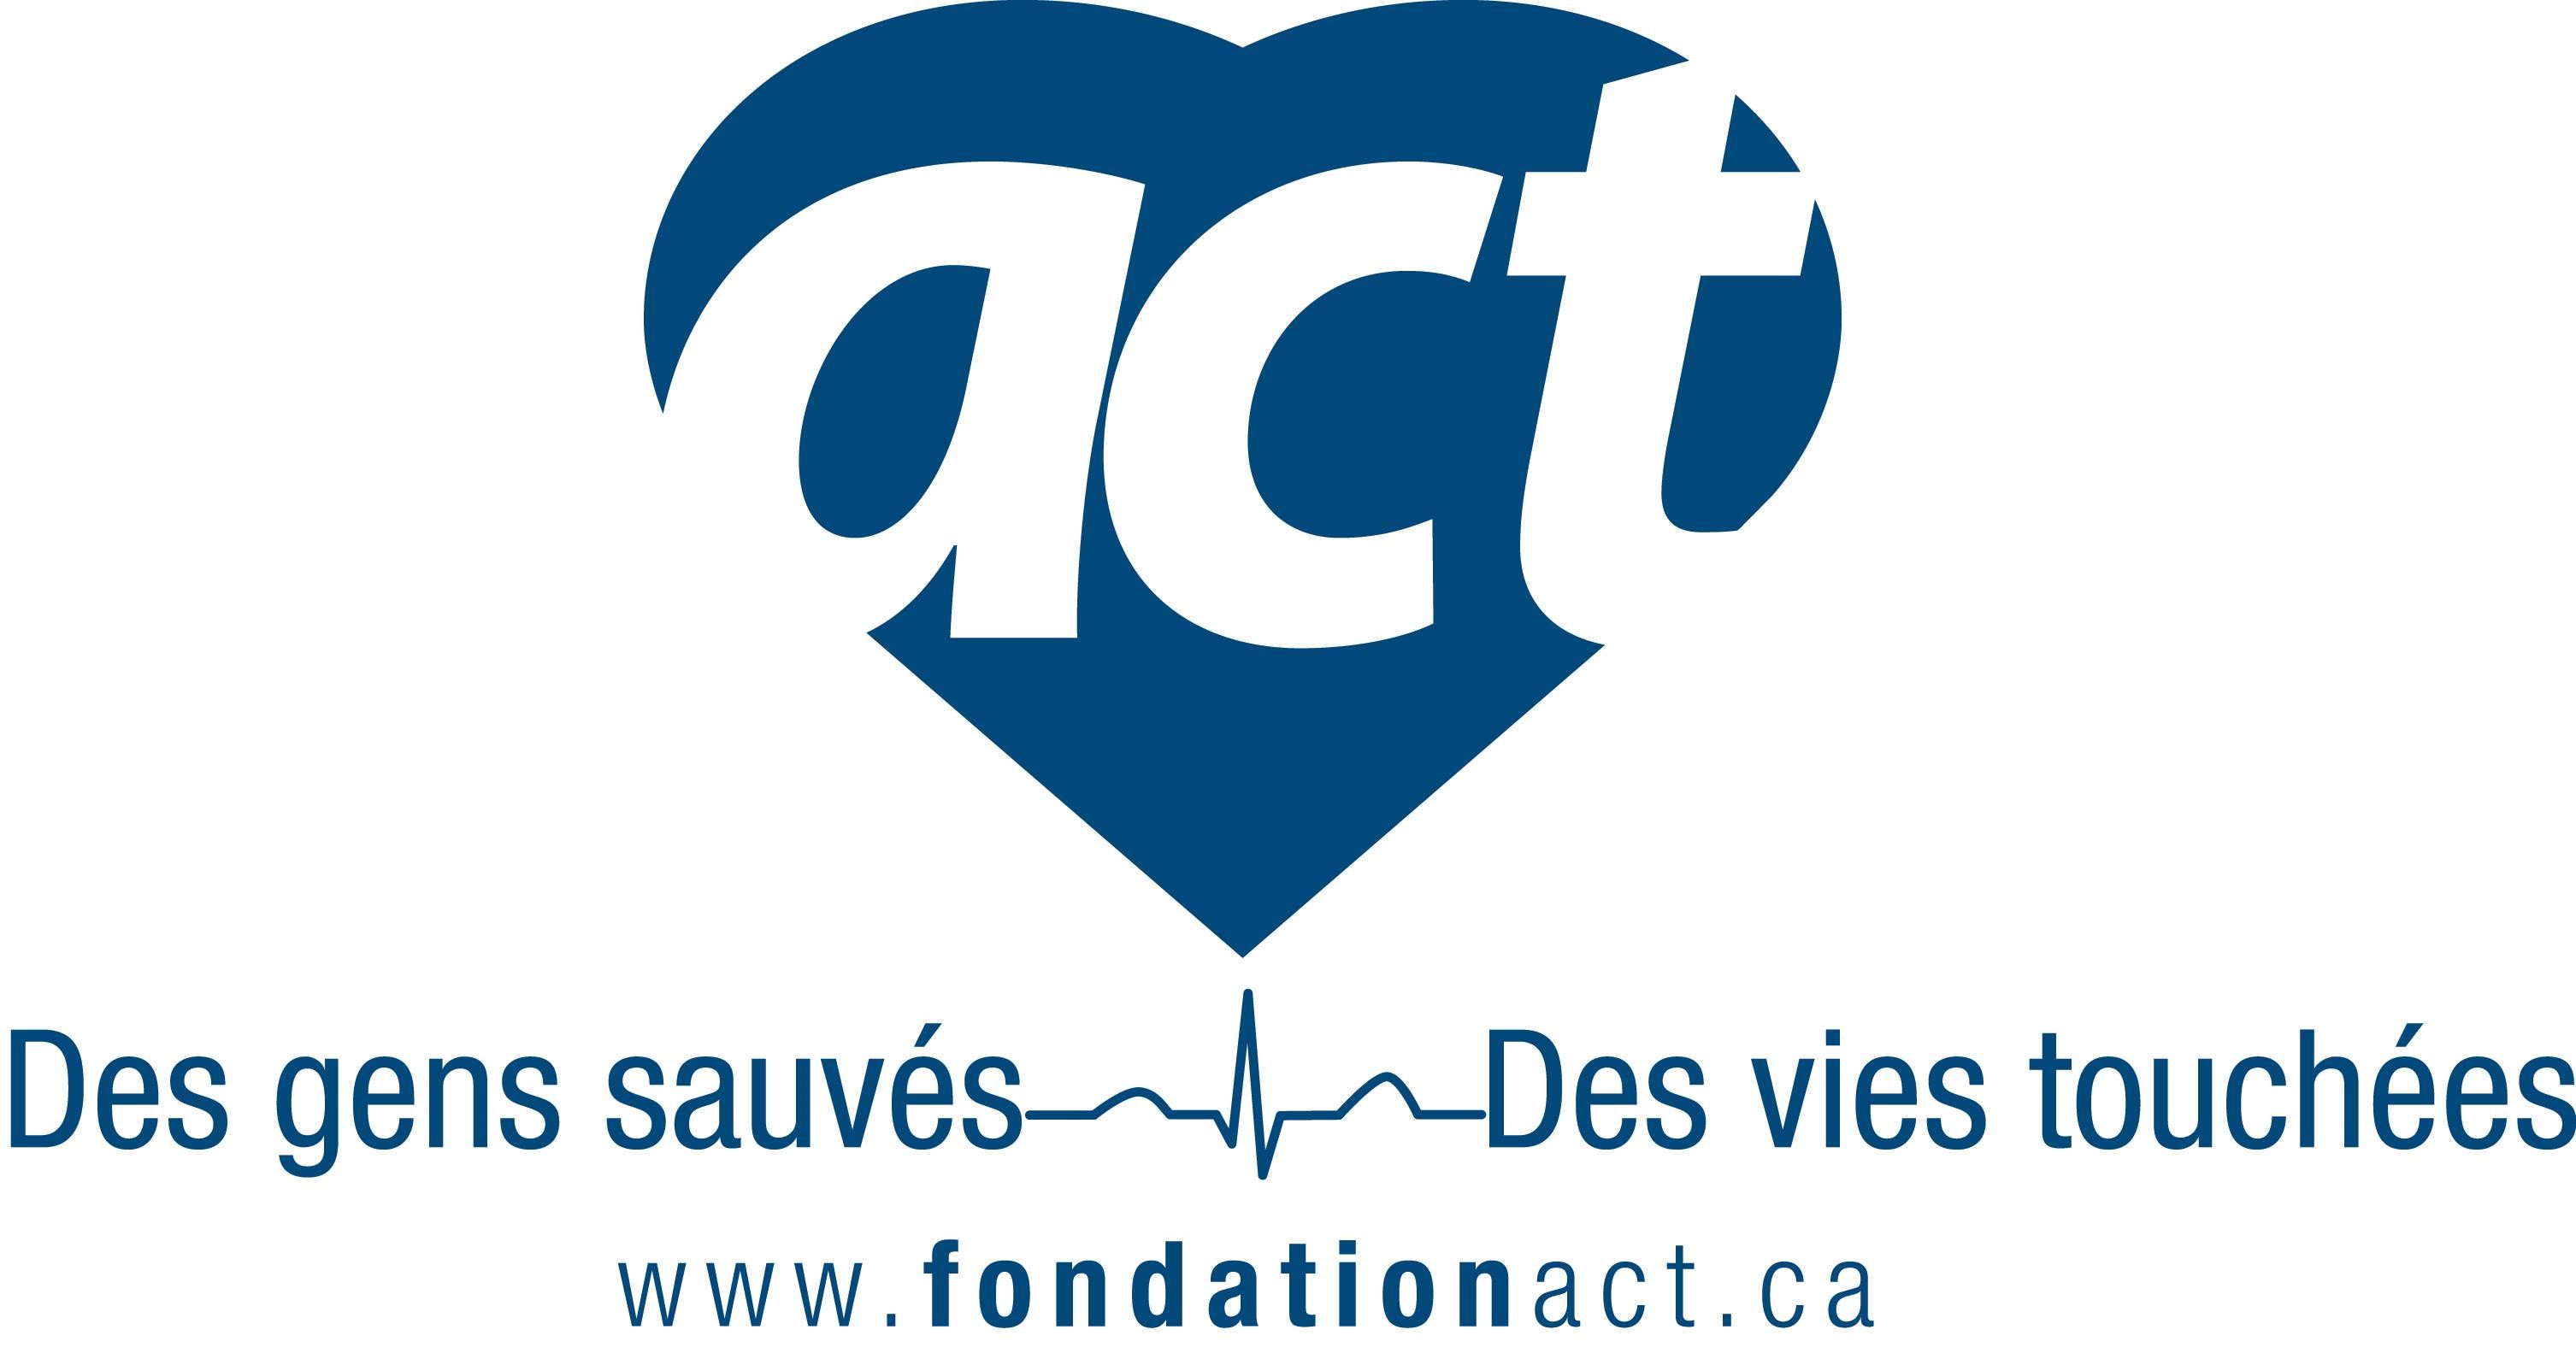 La Fondation ACT sal